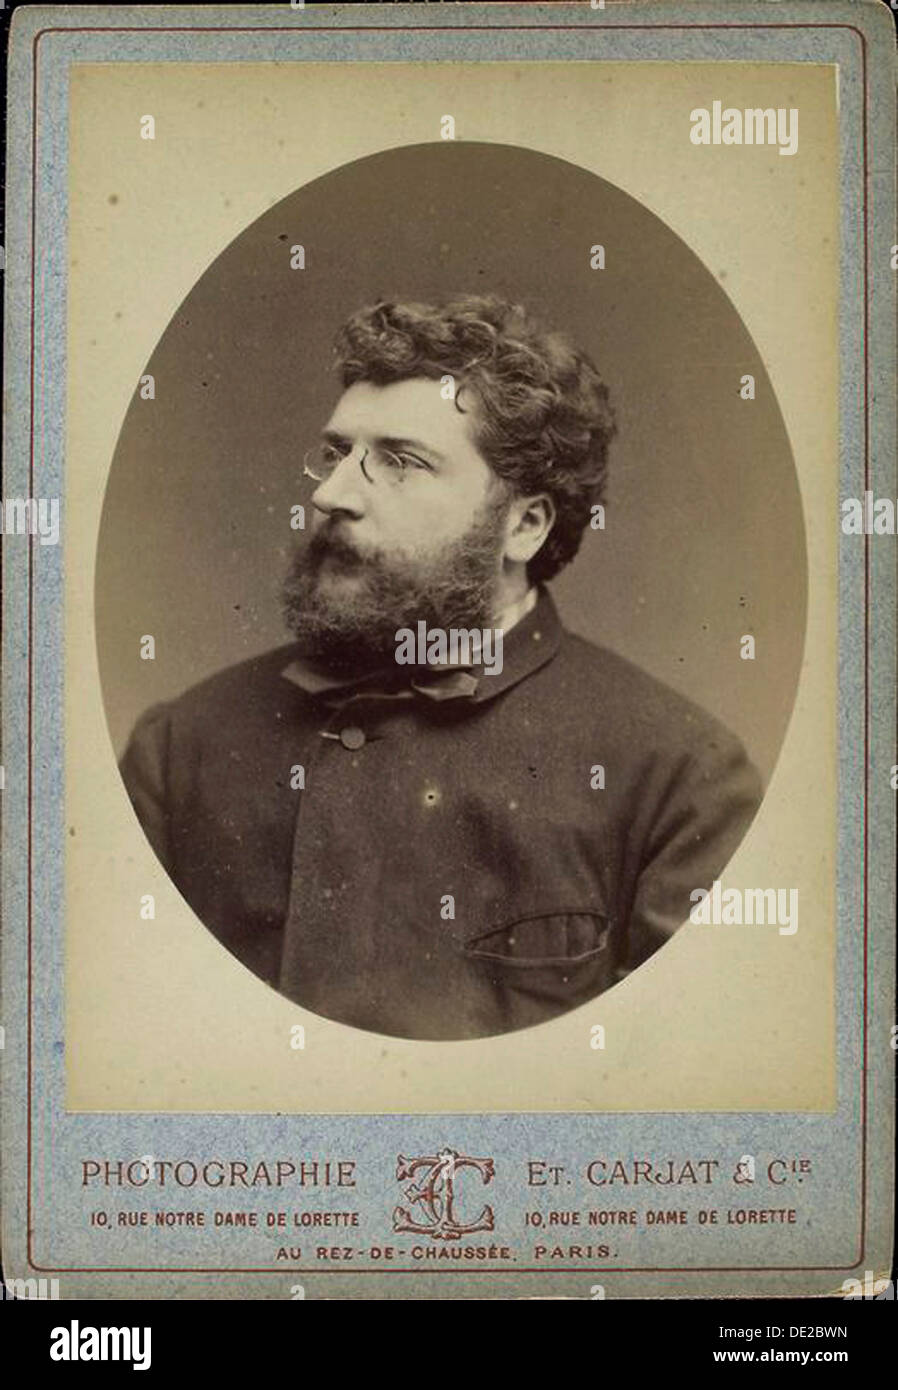 Georges Bizet, Francese del compositore e pianista, 1870s(?). Artista: Etienne Carjat Foto Stock